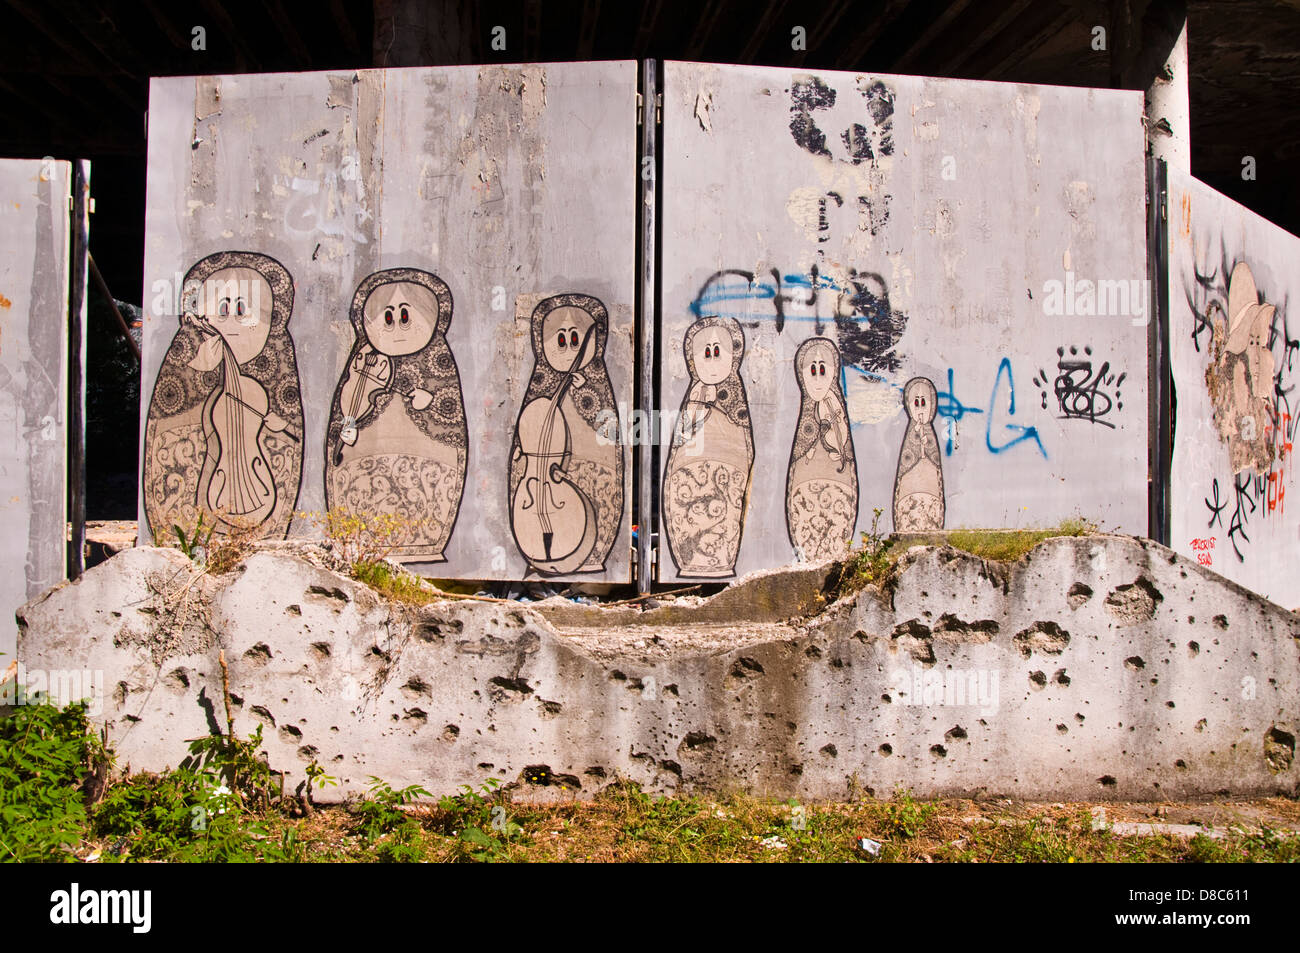 Graffiti and war damaged pockmarked wall in Mostar in Bosnia Herzegovina Stock Photo